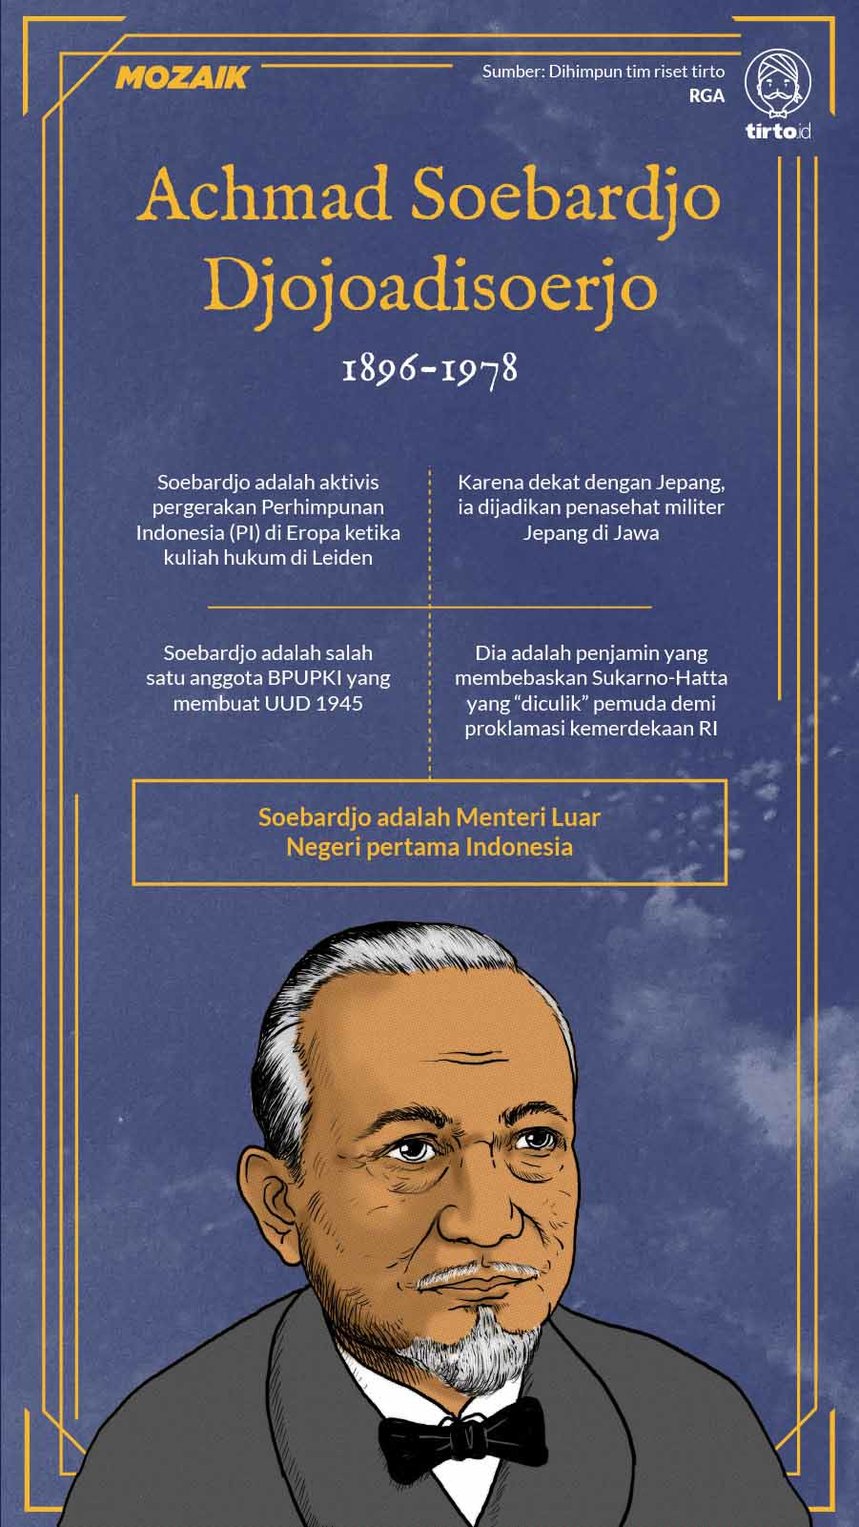 Infografik Mozaik Achmad Soebardjo